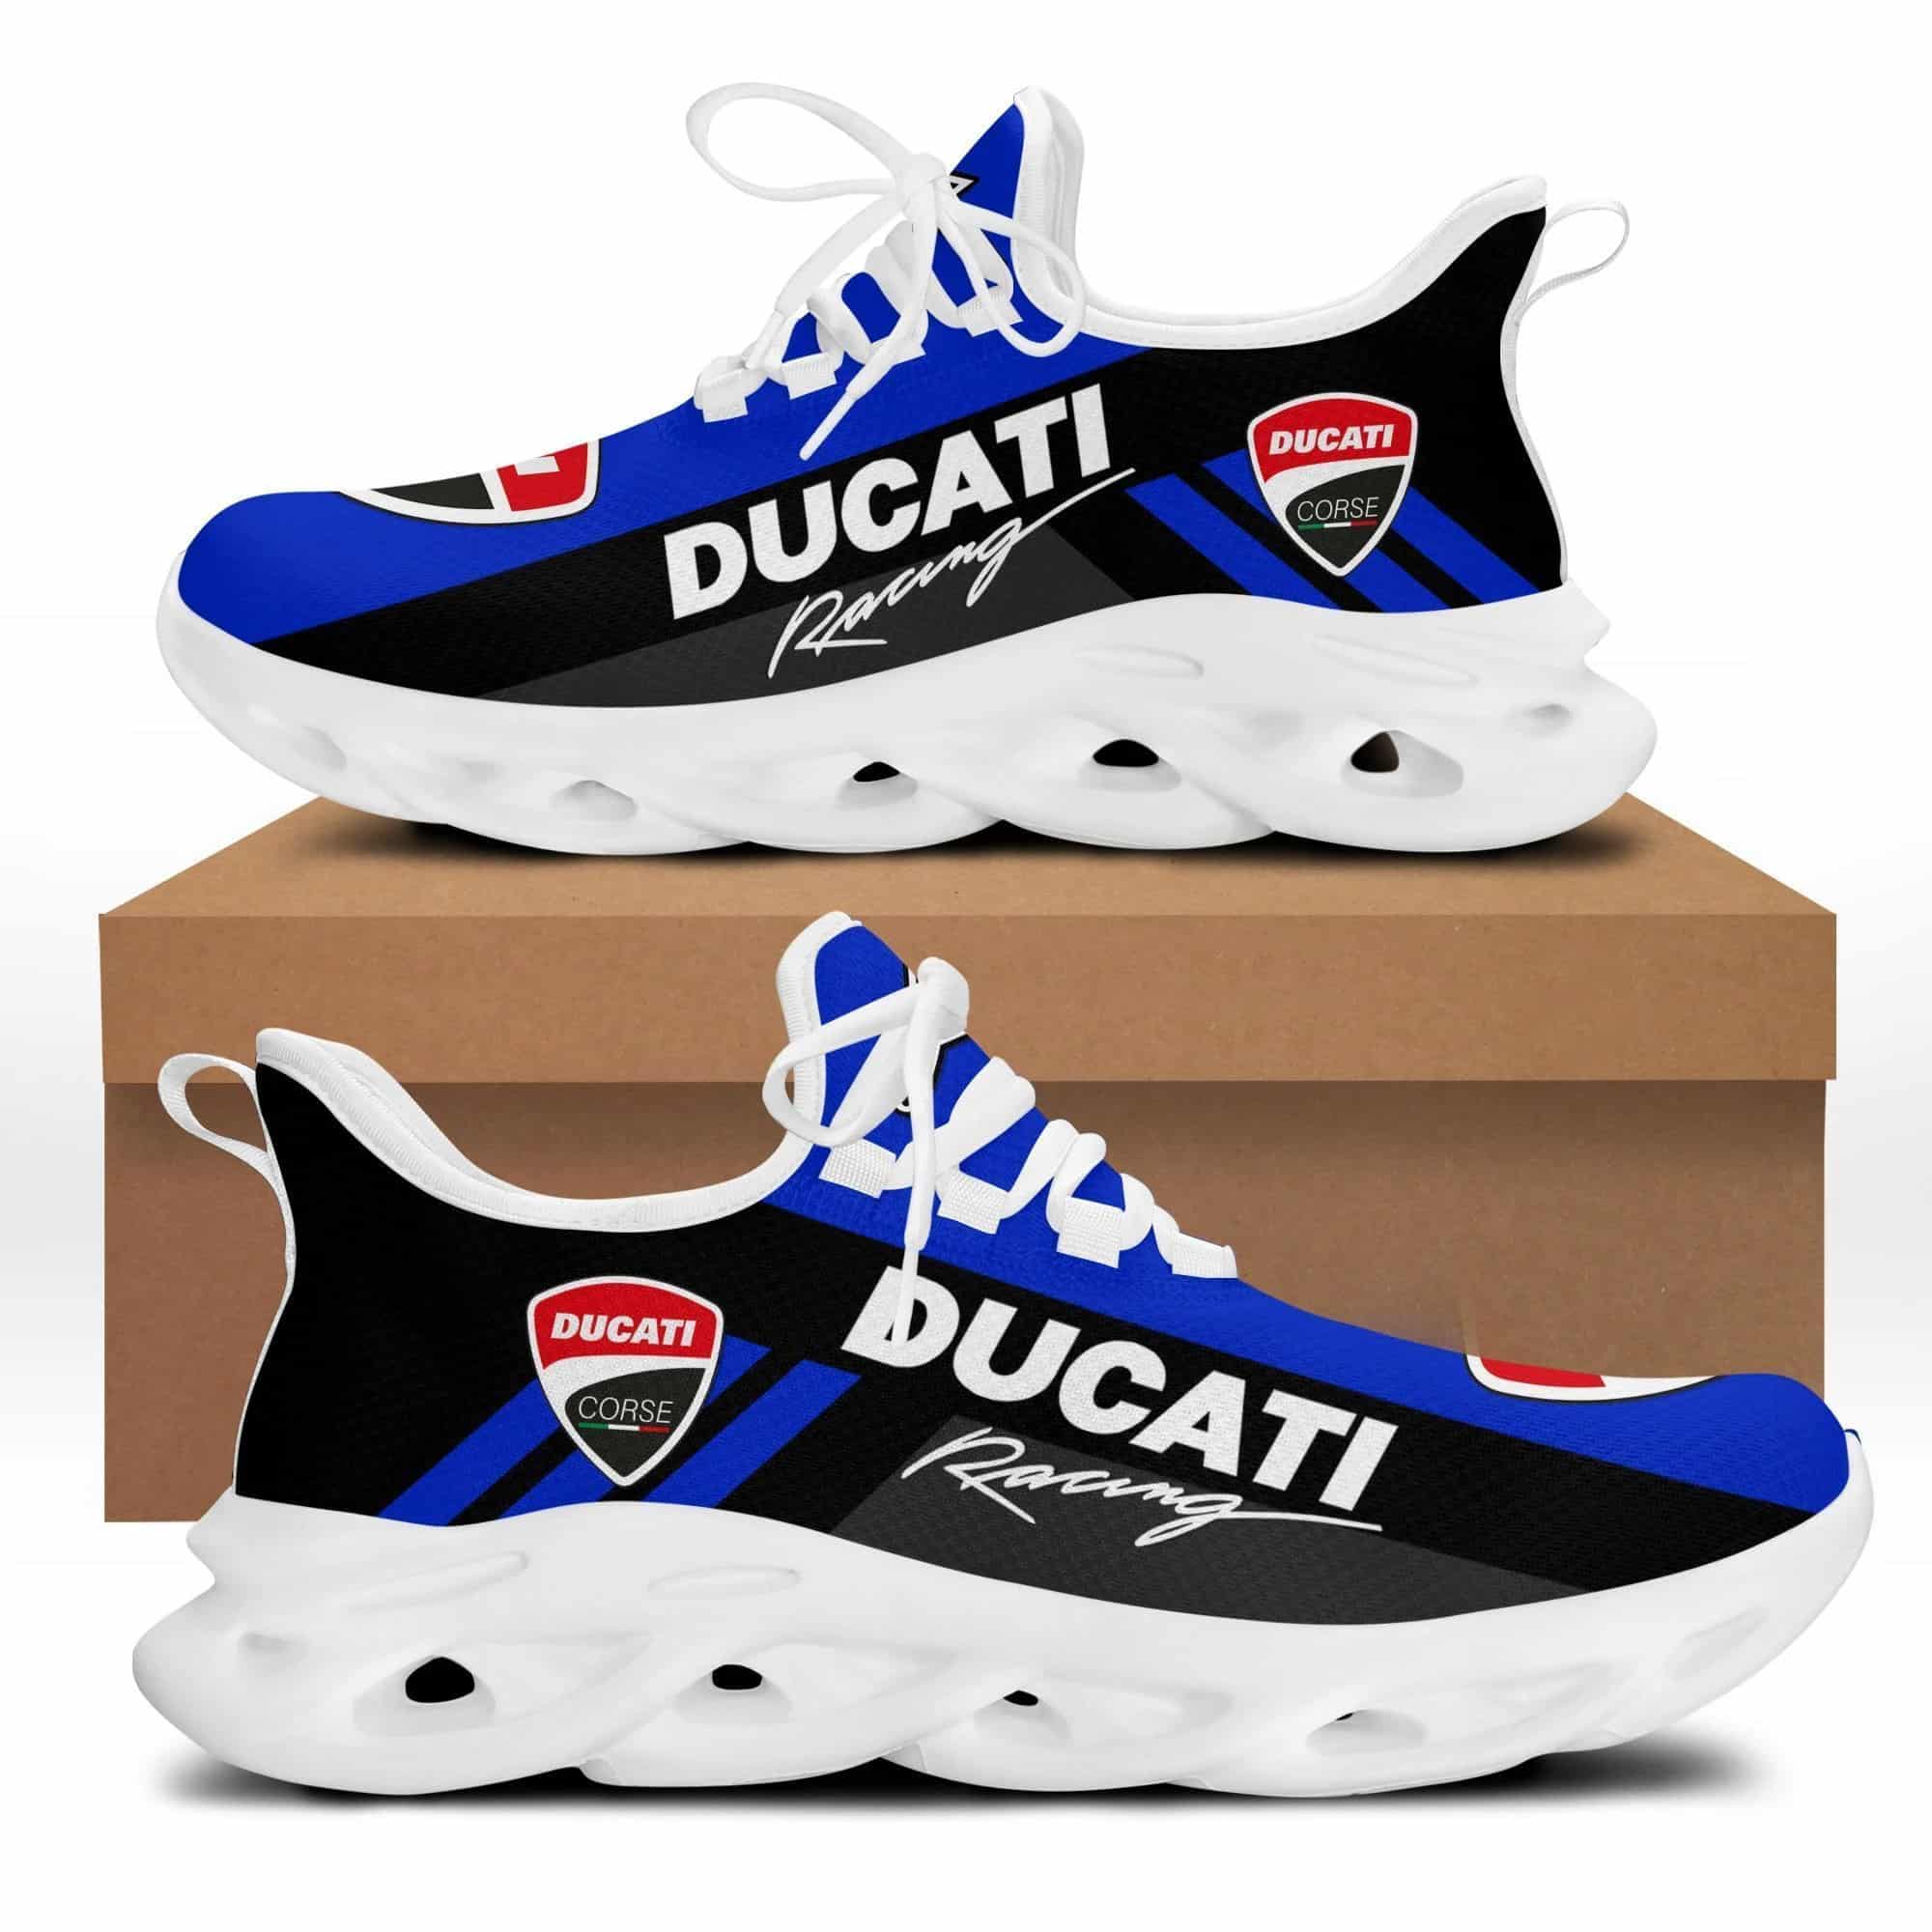 Ducati Racing Running Shoes Max Soul Shoes Sneakers Ver 4 2